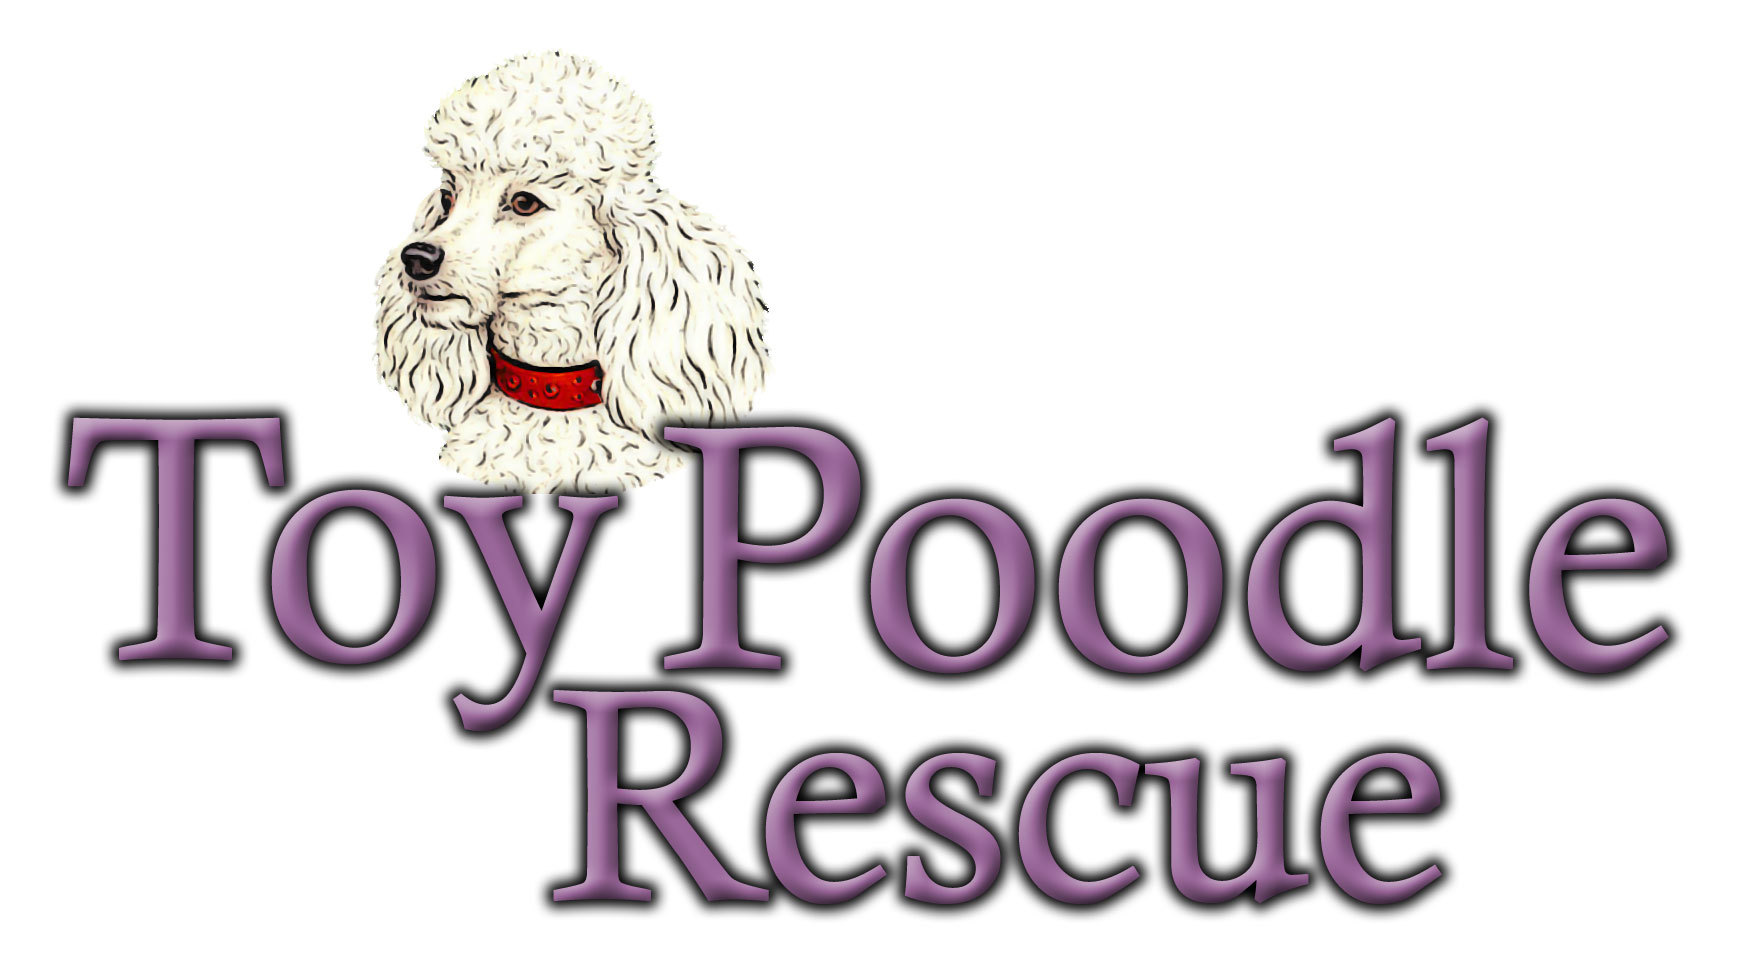 poodle rescue organizations